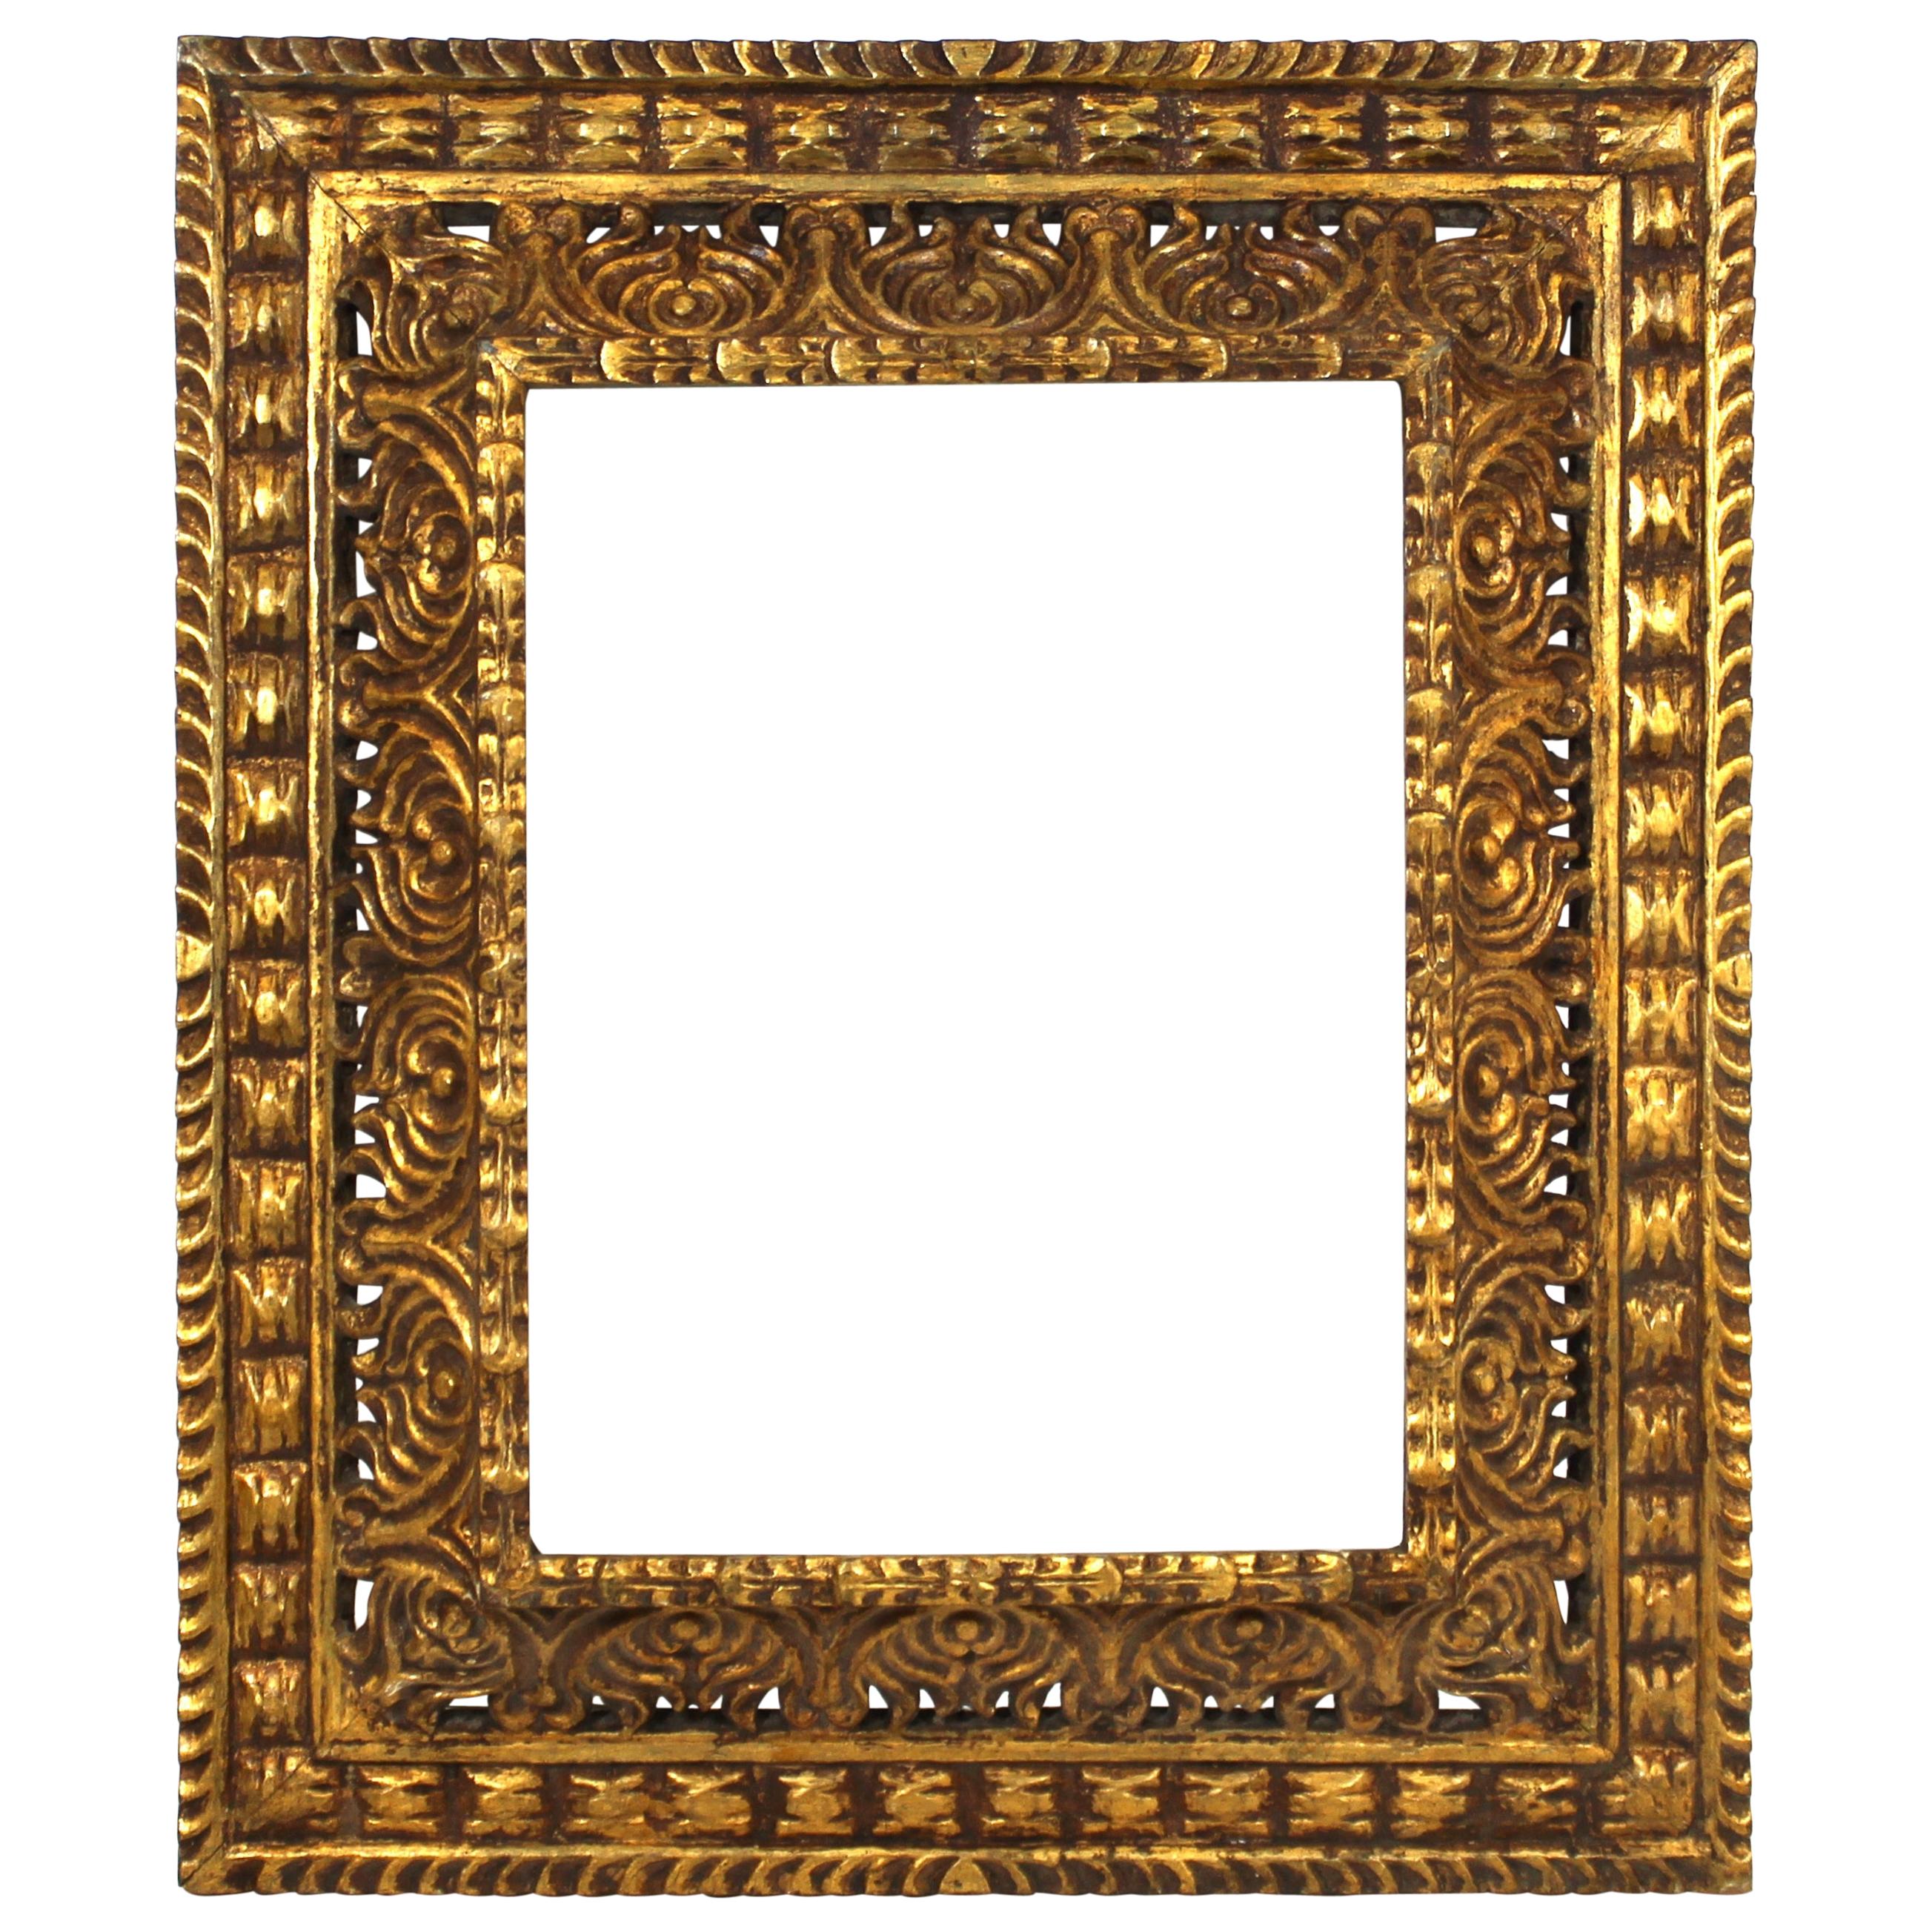 Spanish Baroque Revival Giltwood Carved Frame For Sale